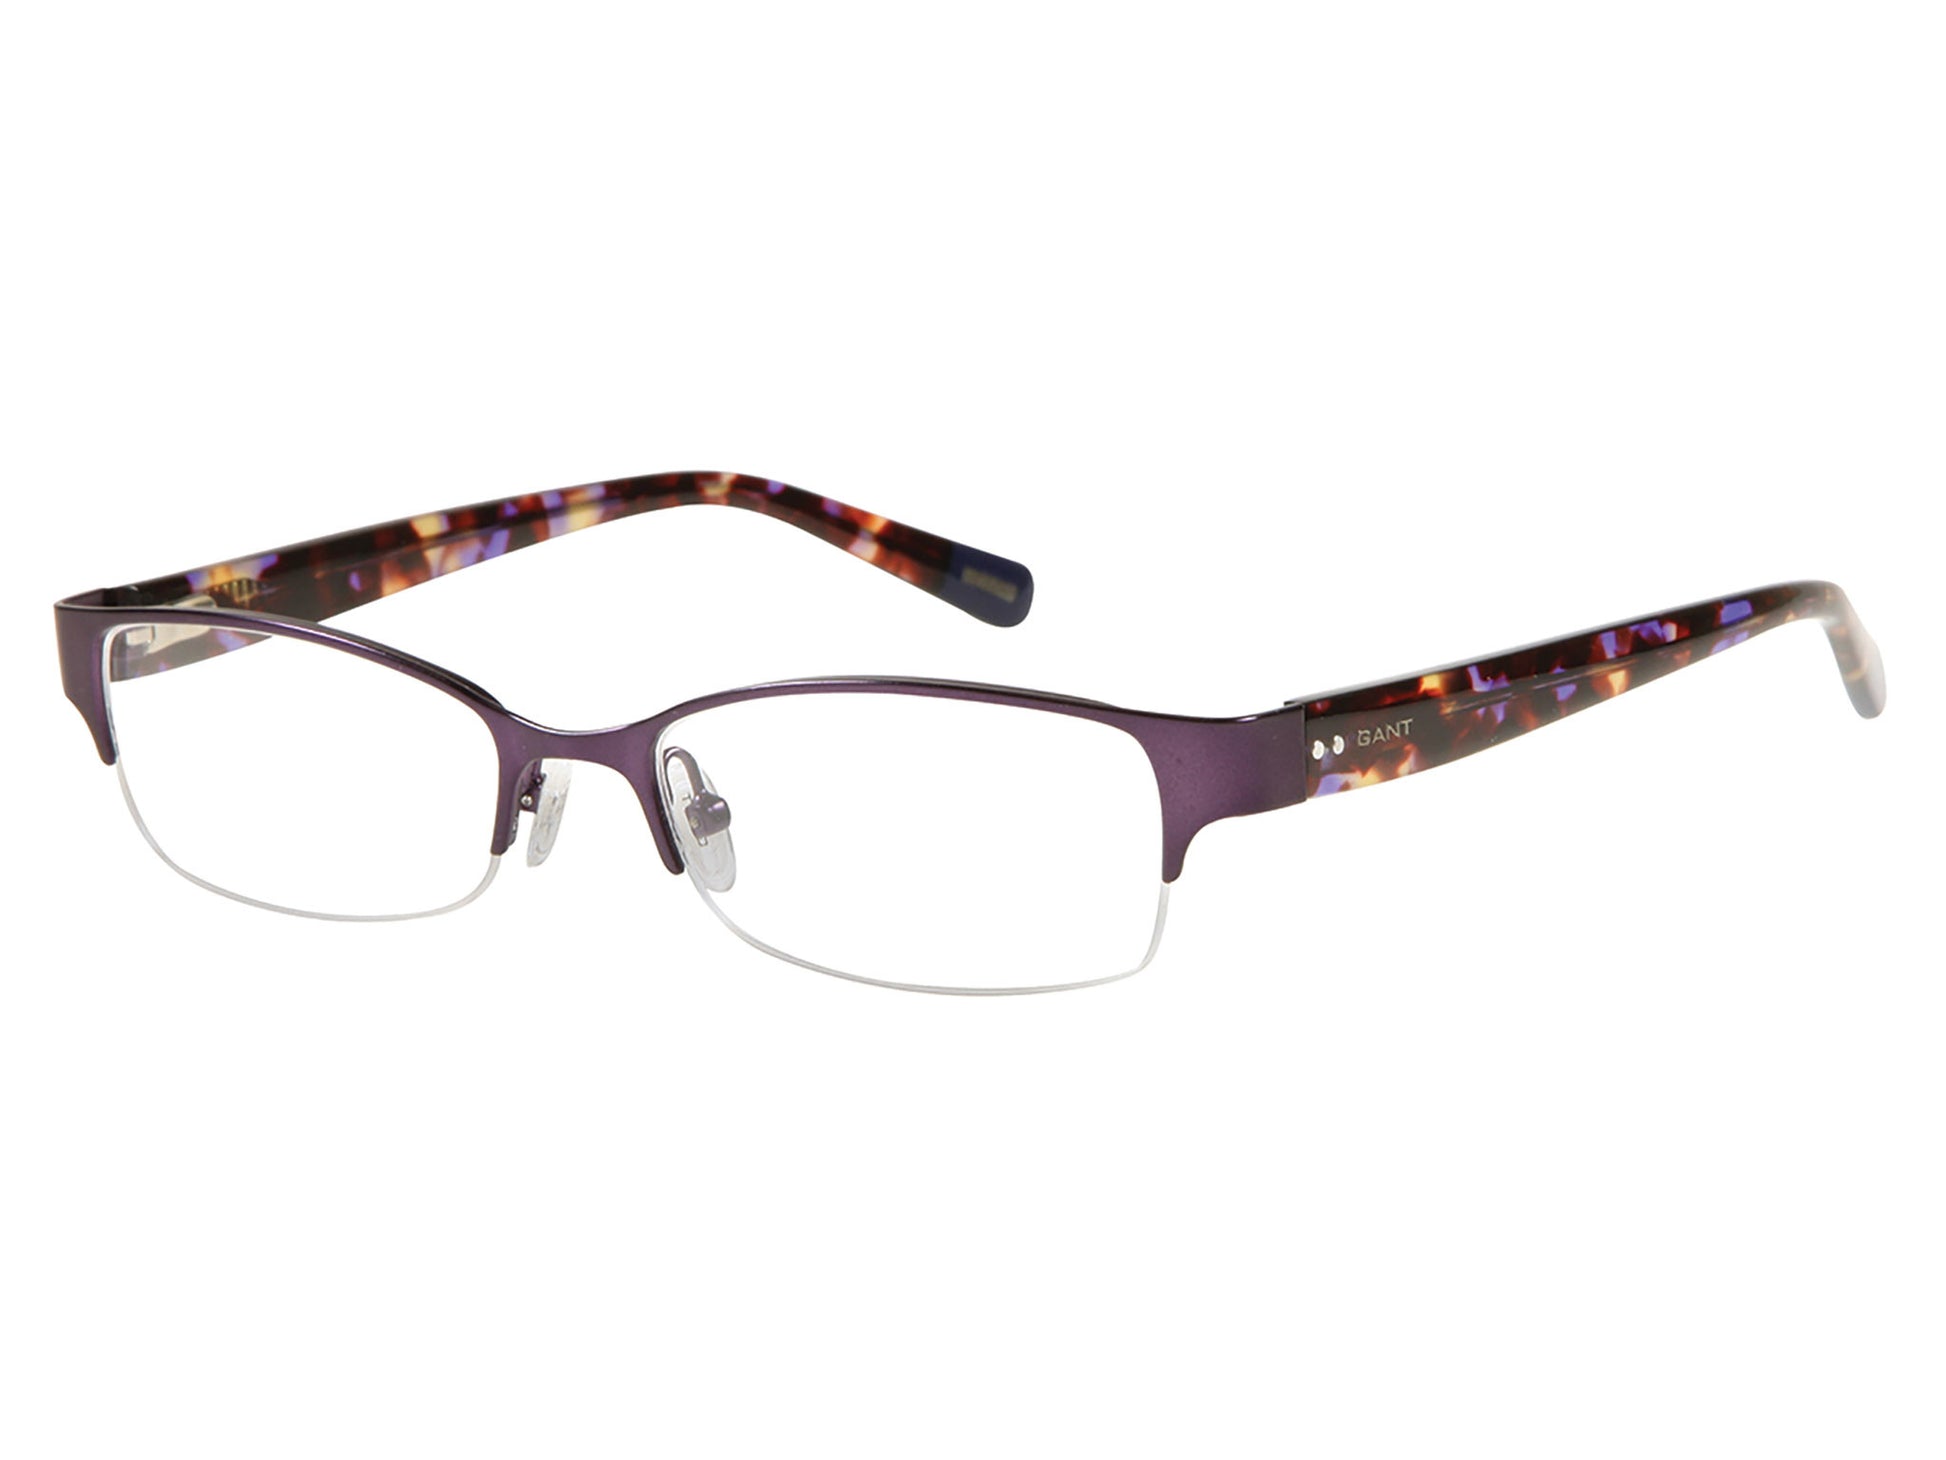 Gant GAA387 Eyeglasses 082-082 - Matte Violet